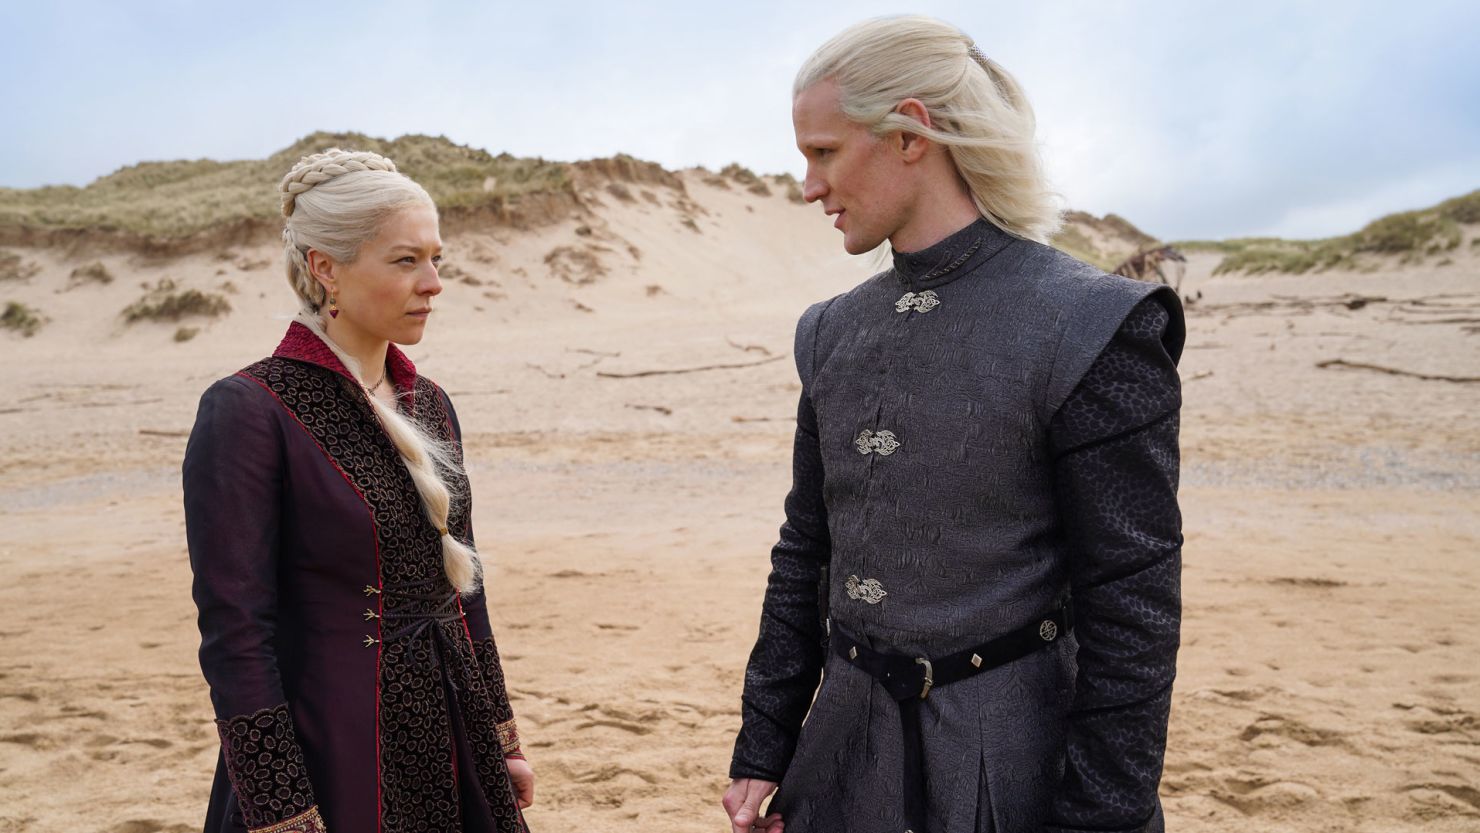 Princess Rhaenyra Targaryen (L) is played by Emma D'Arcy and Matt Smith plays Prince Daemon Targaryen.